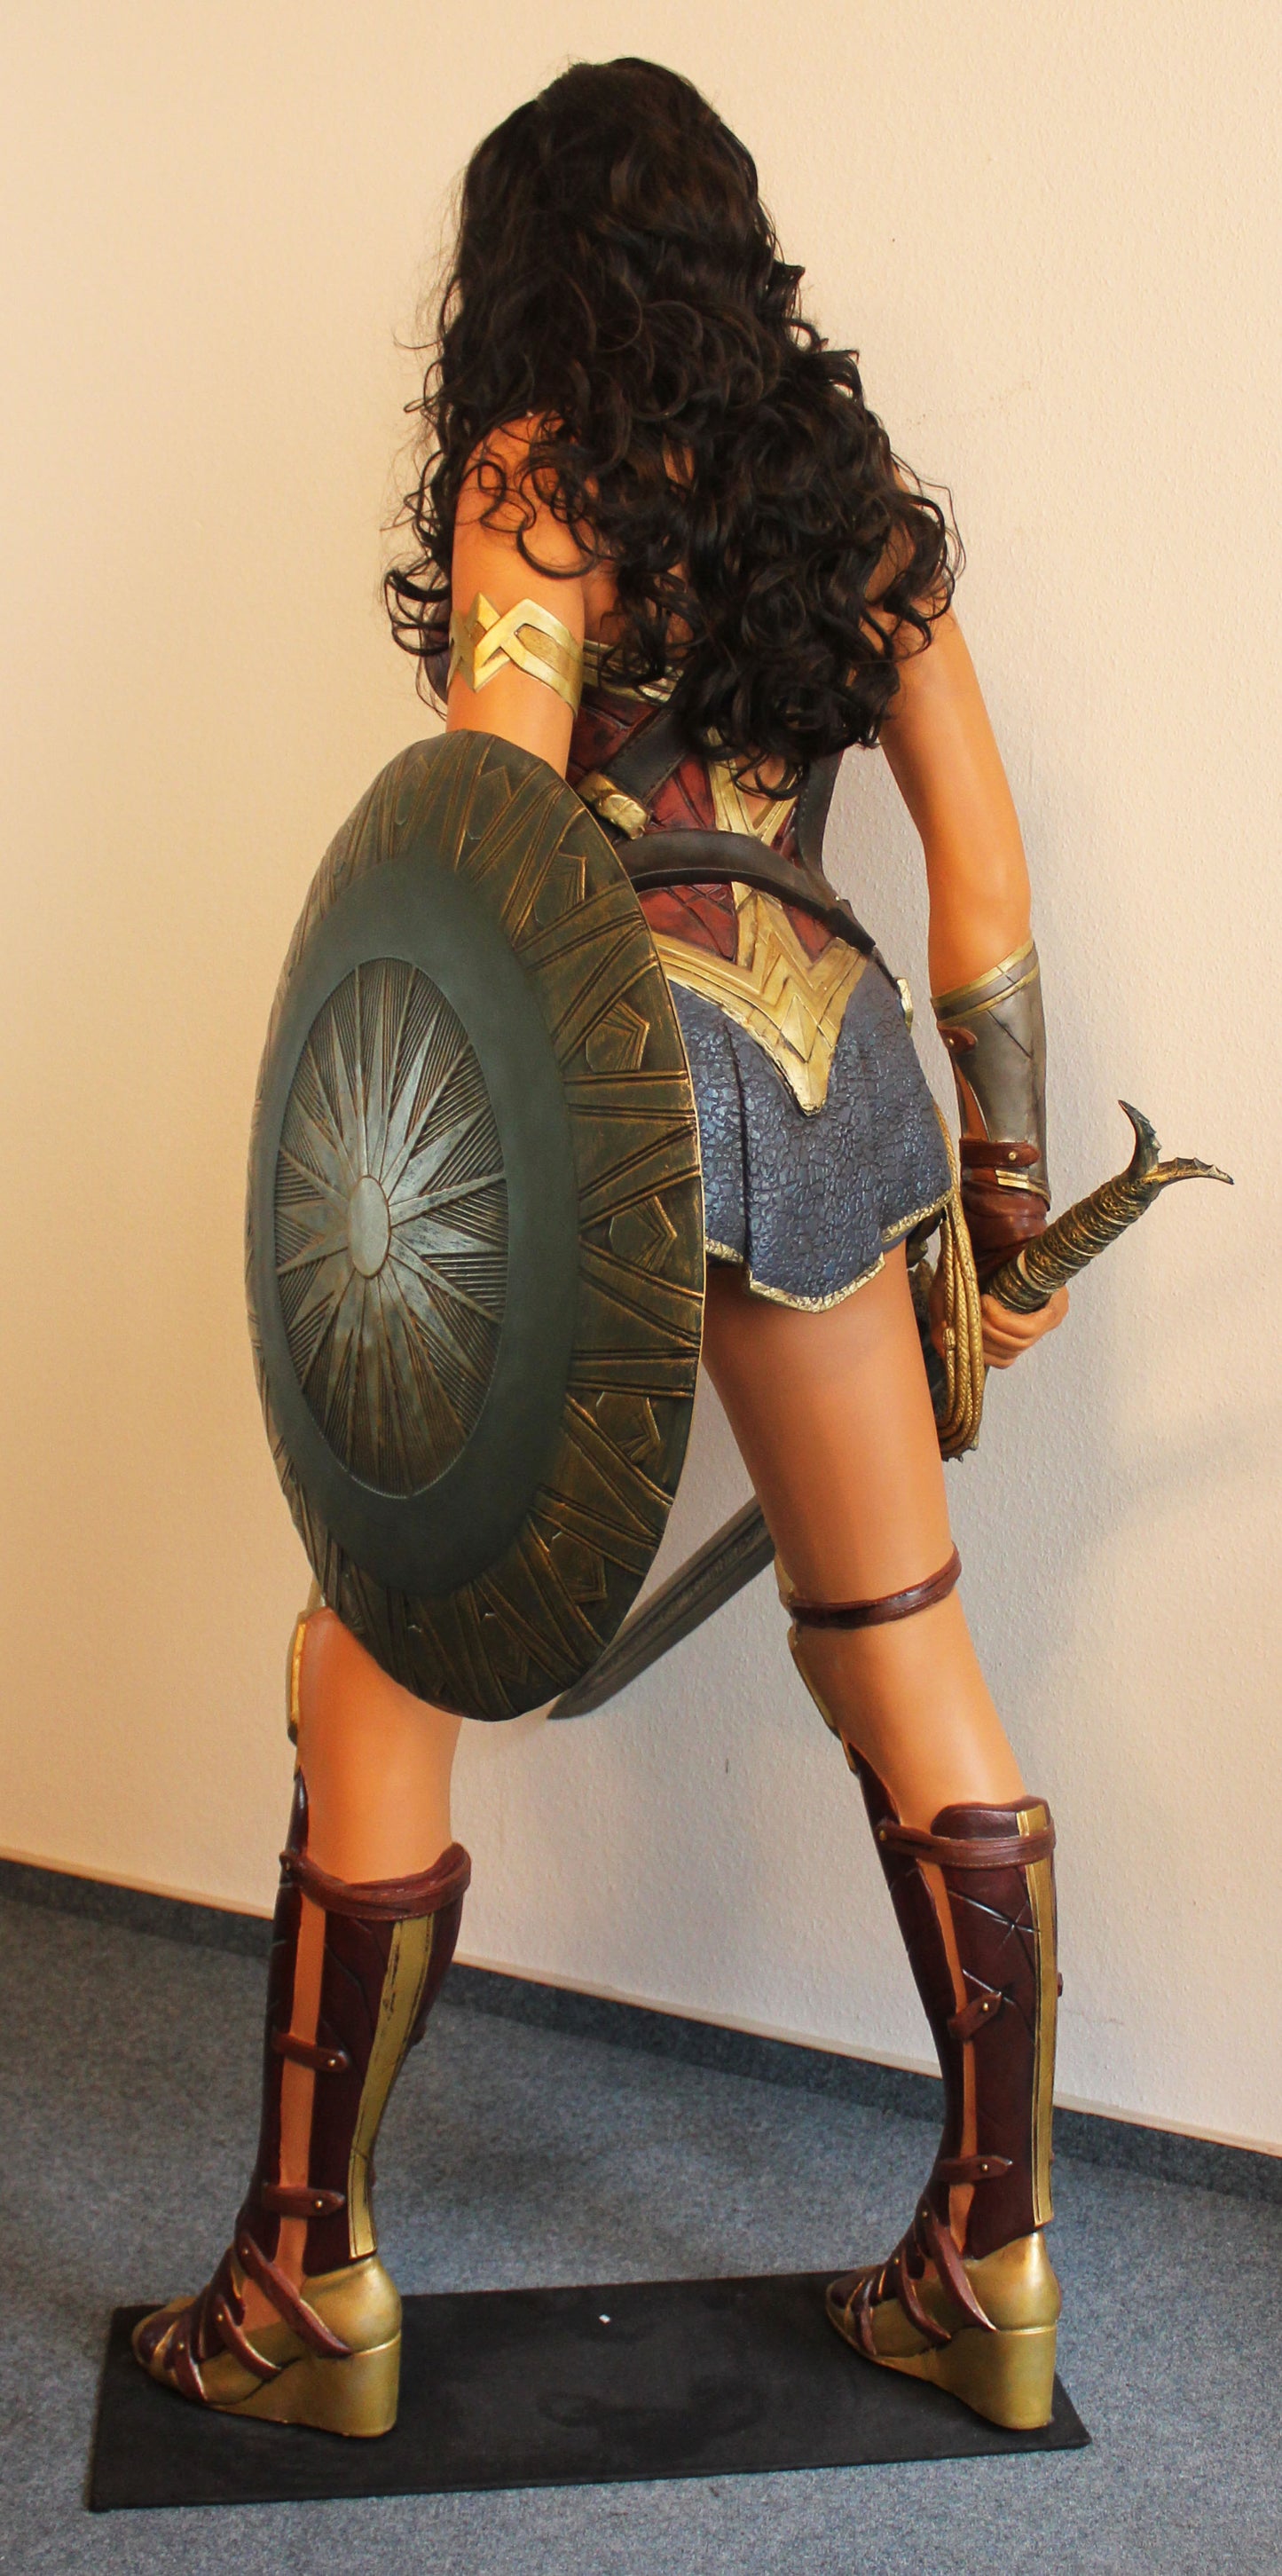 Wonder Woman Life-Size Statue